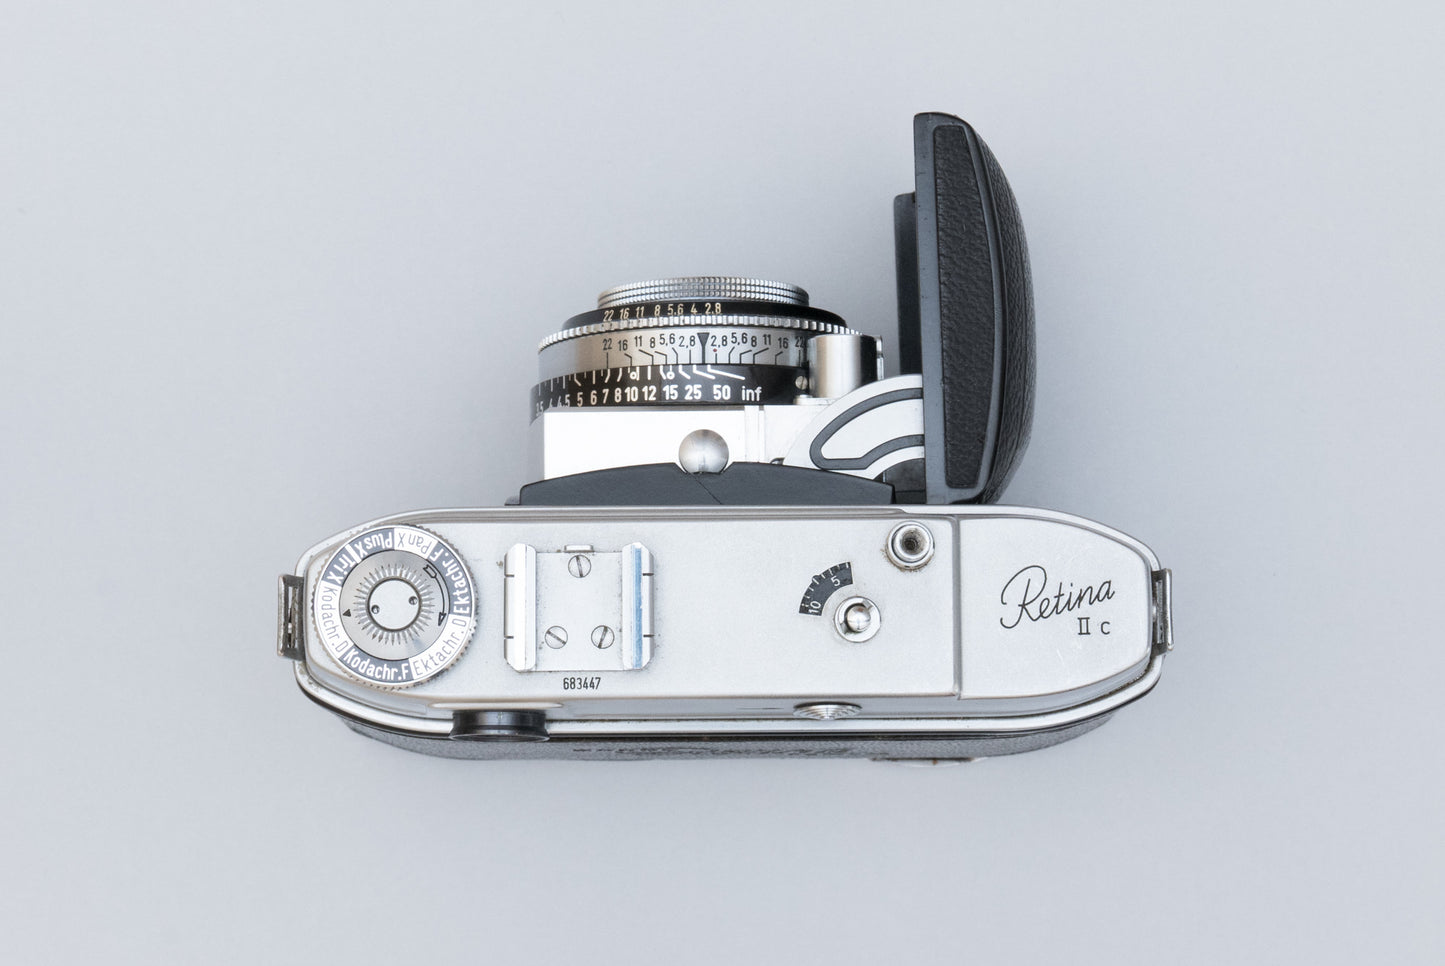 Kodak Retina IIc Rangefinder 35mm Film Camera